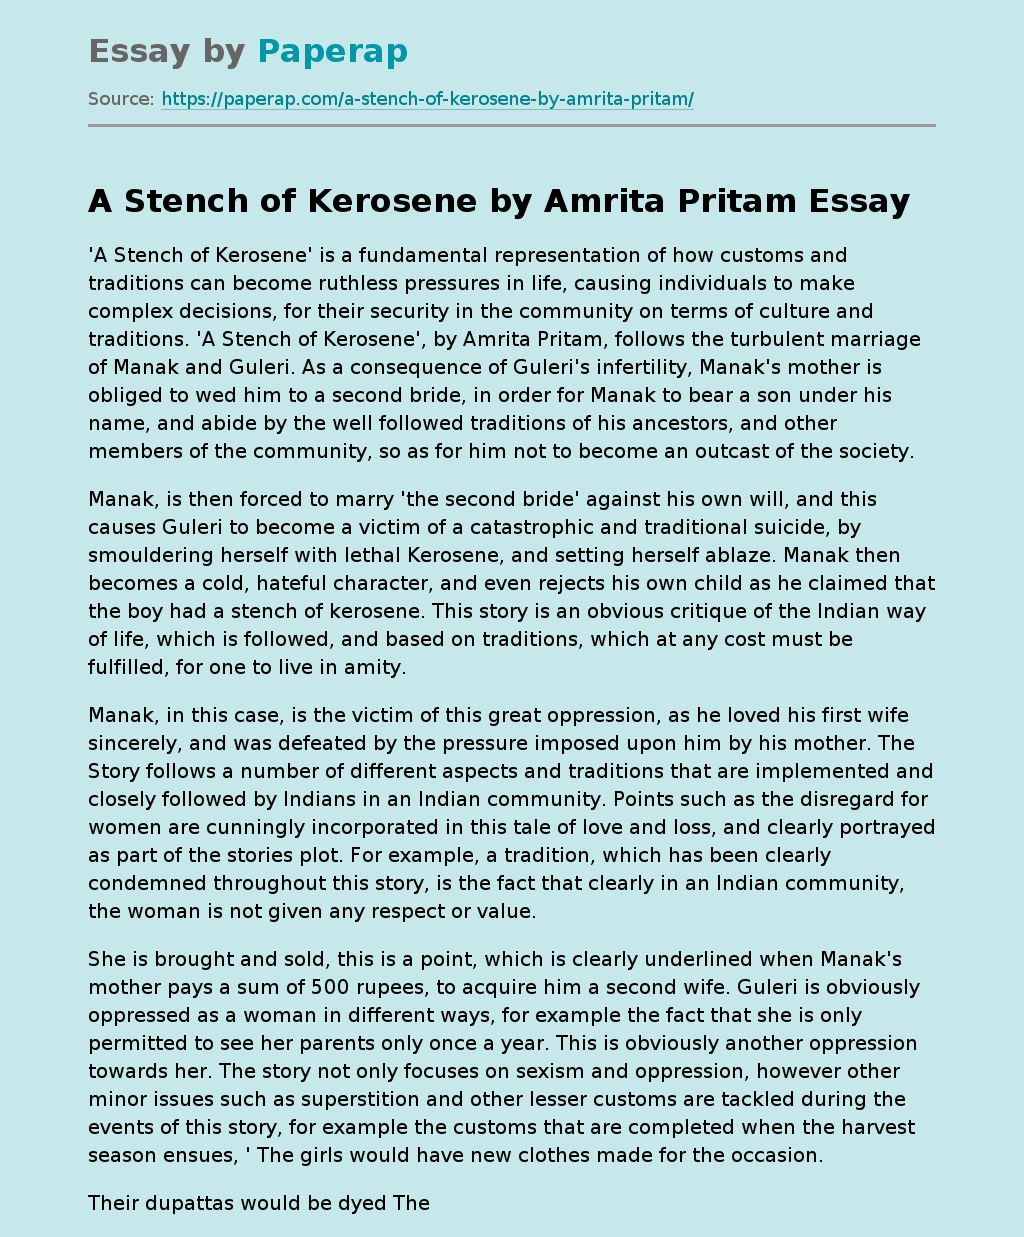 A Stench of Kerosene by Amrita Pritam